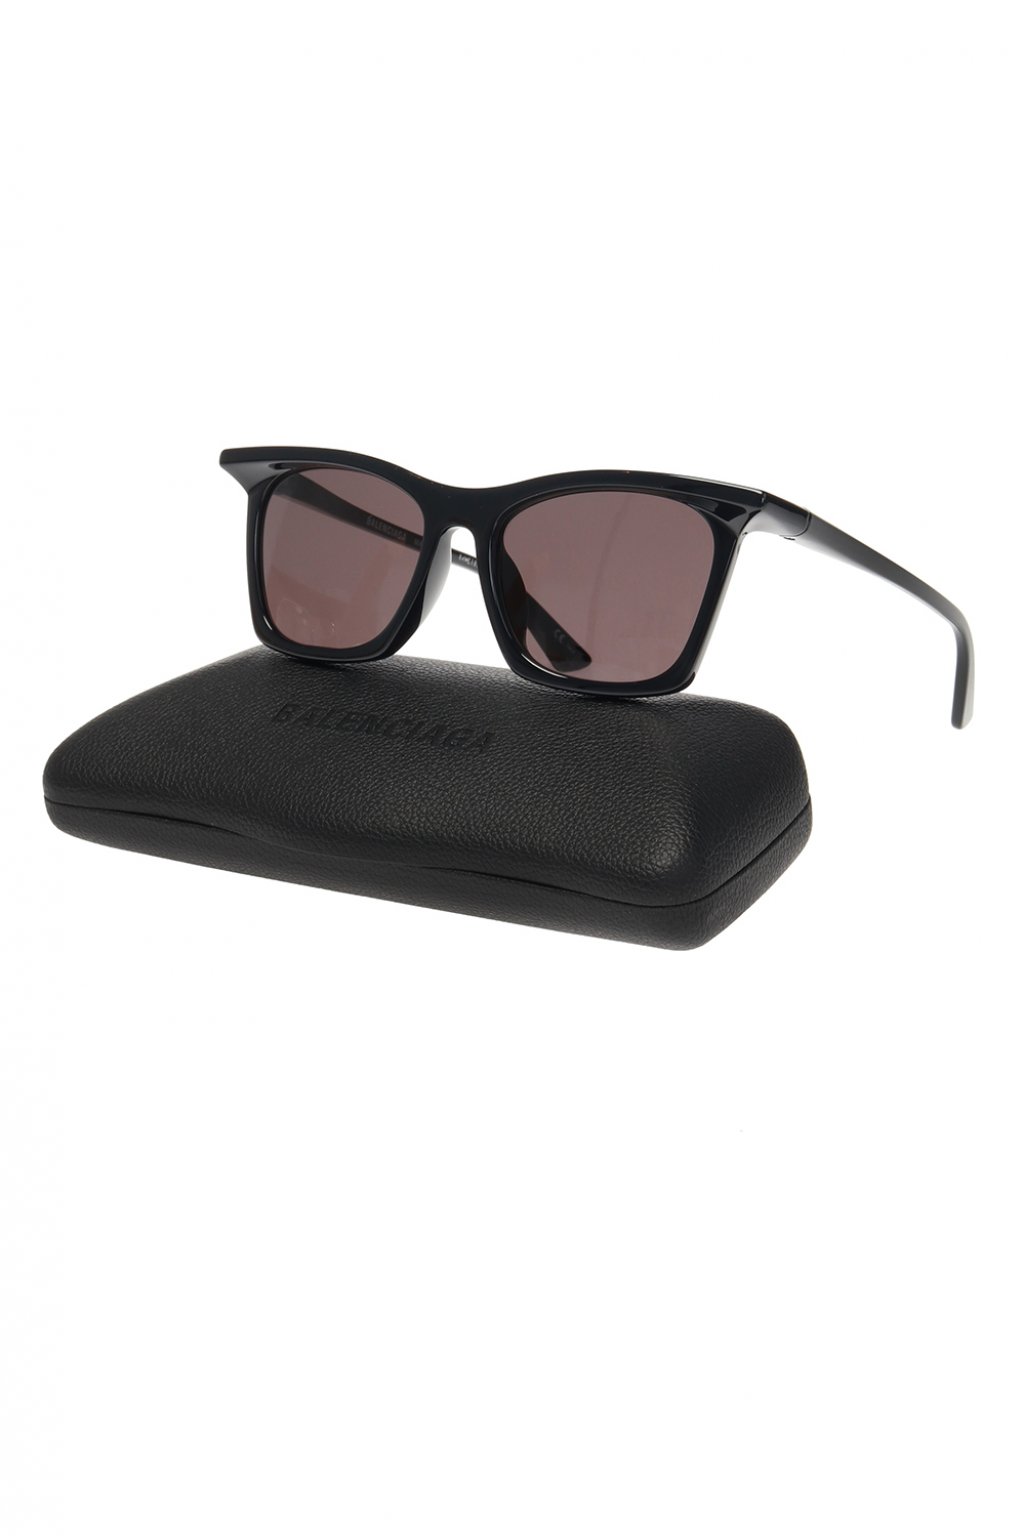 Balenciaga Sunglasses RAY-BAN State Side 0RB4356 601 B1 Black Dark Grey